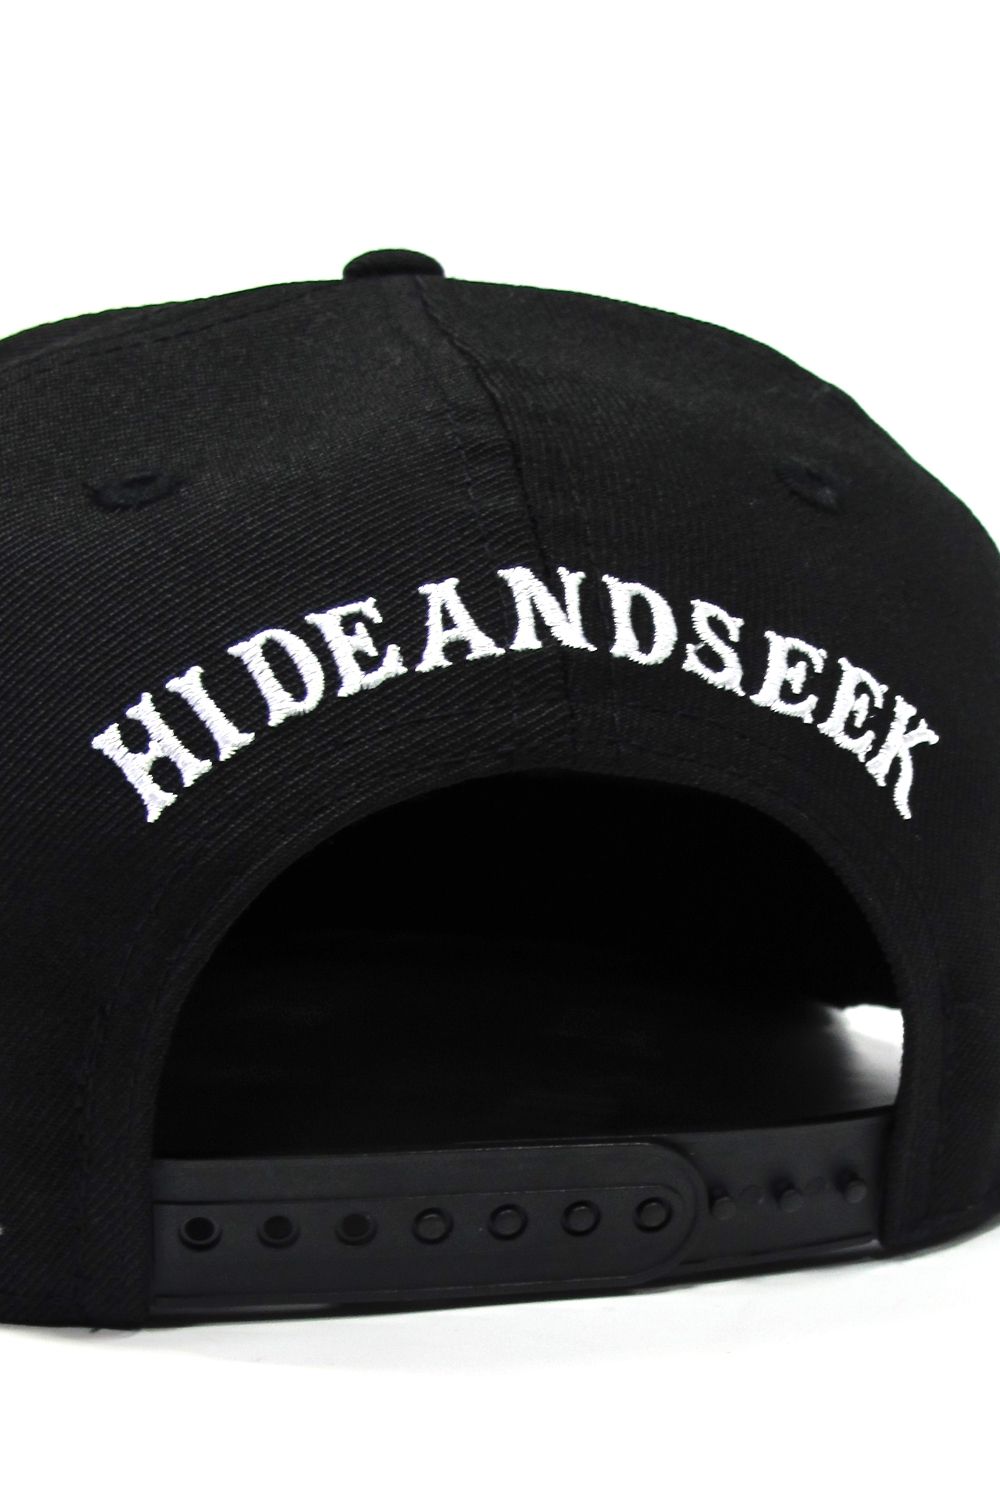 HIDE AND SEEK - ×TENDERLOIN×NEWERA BASEBALL CAP 